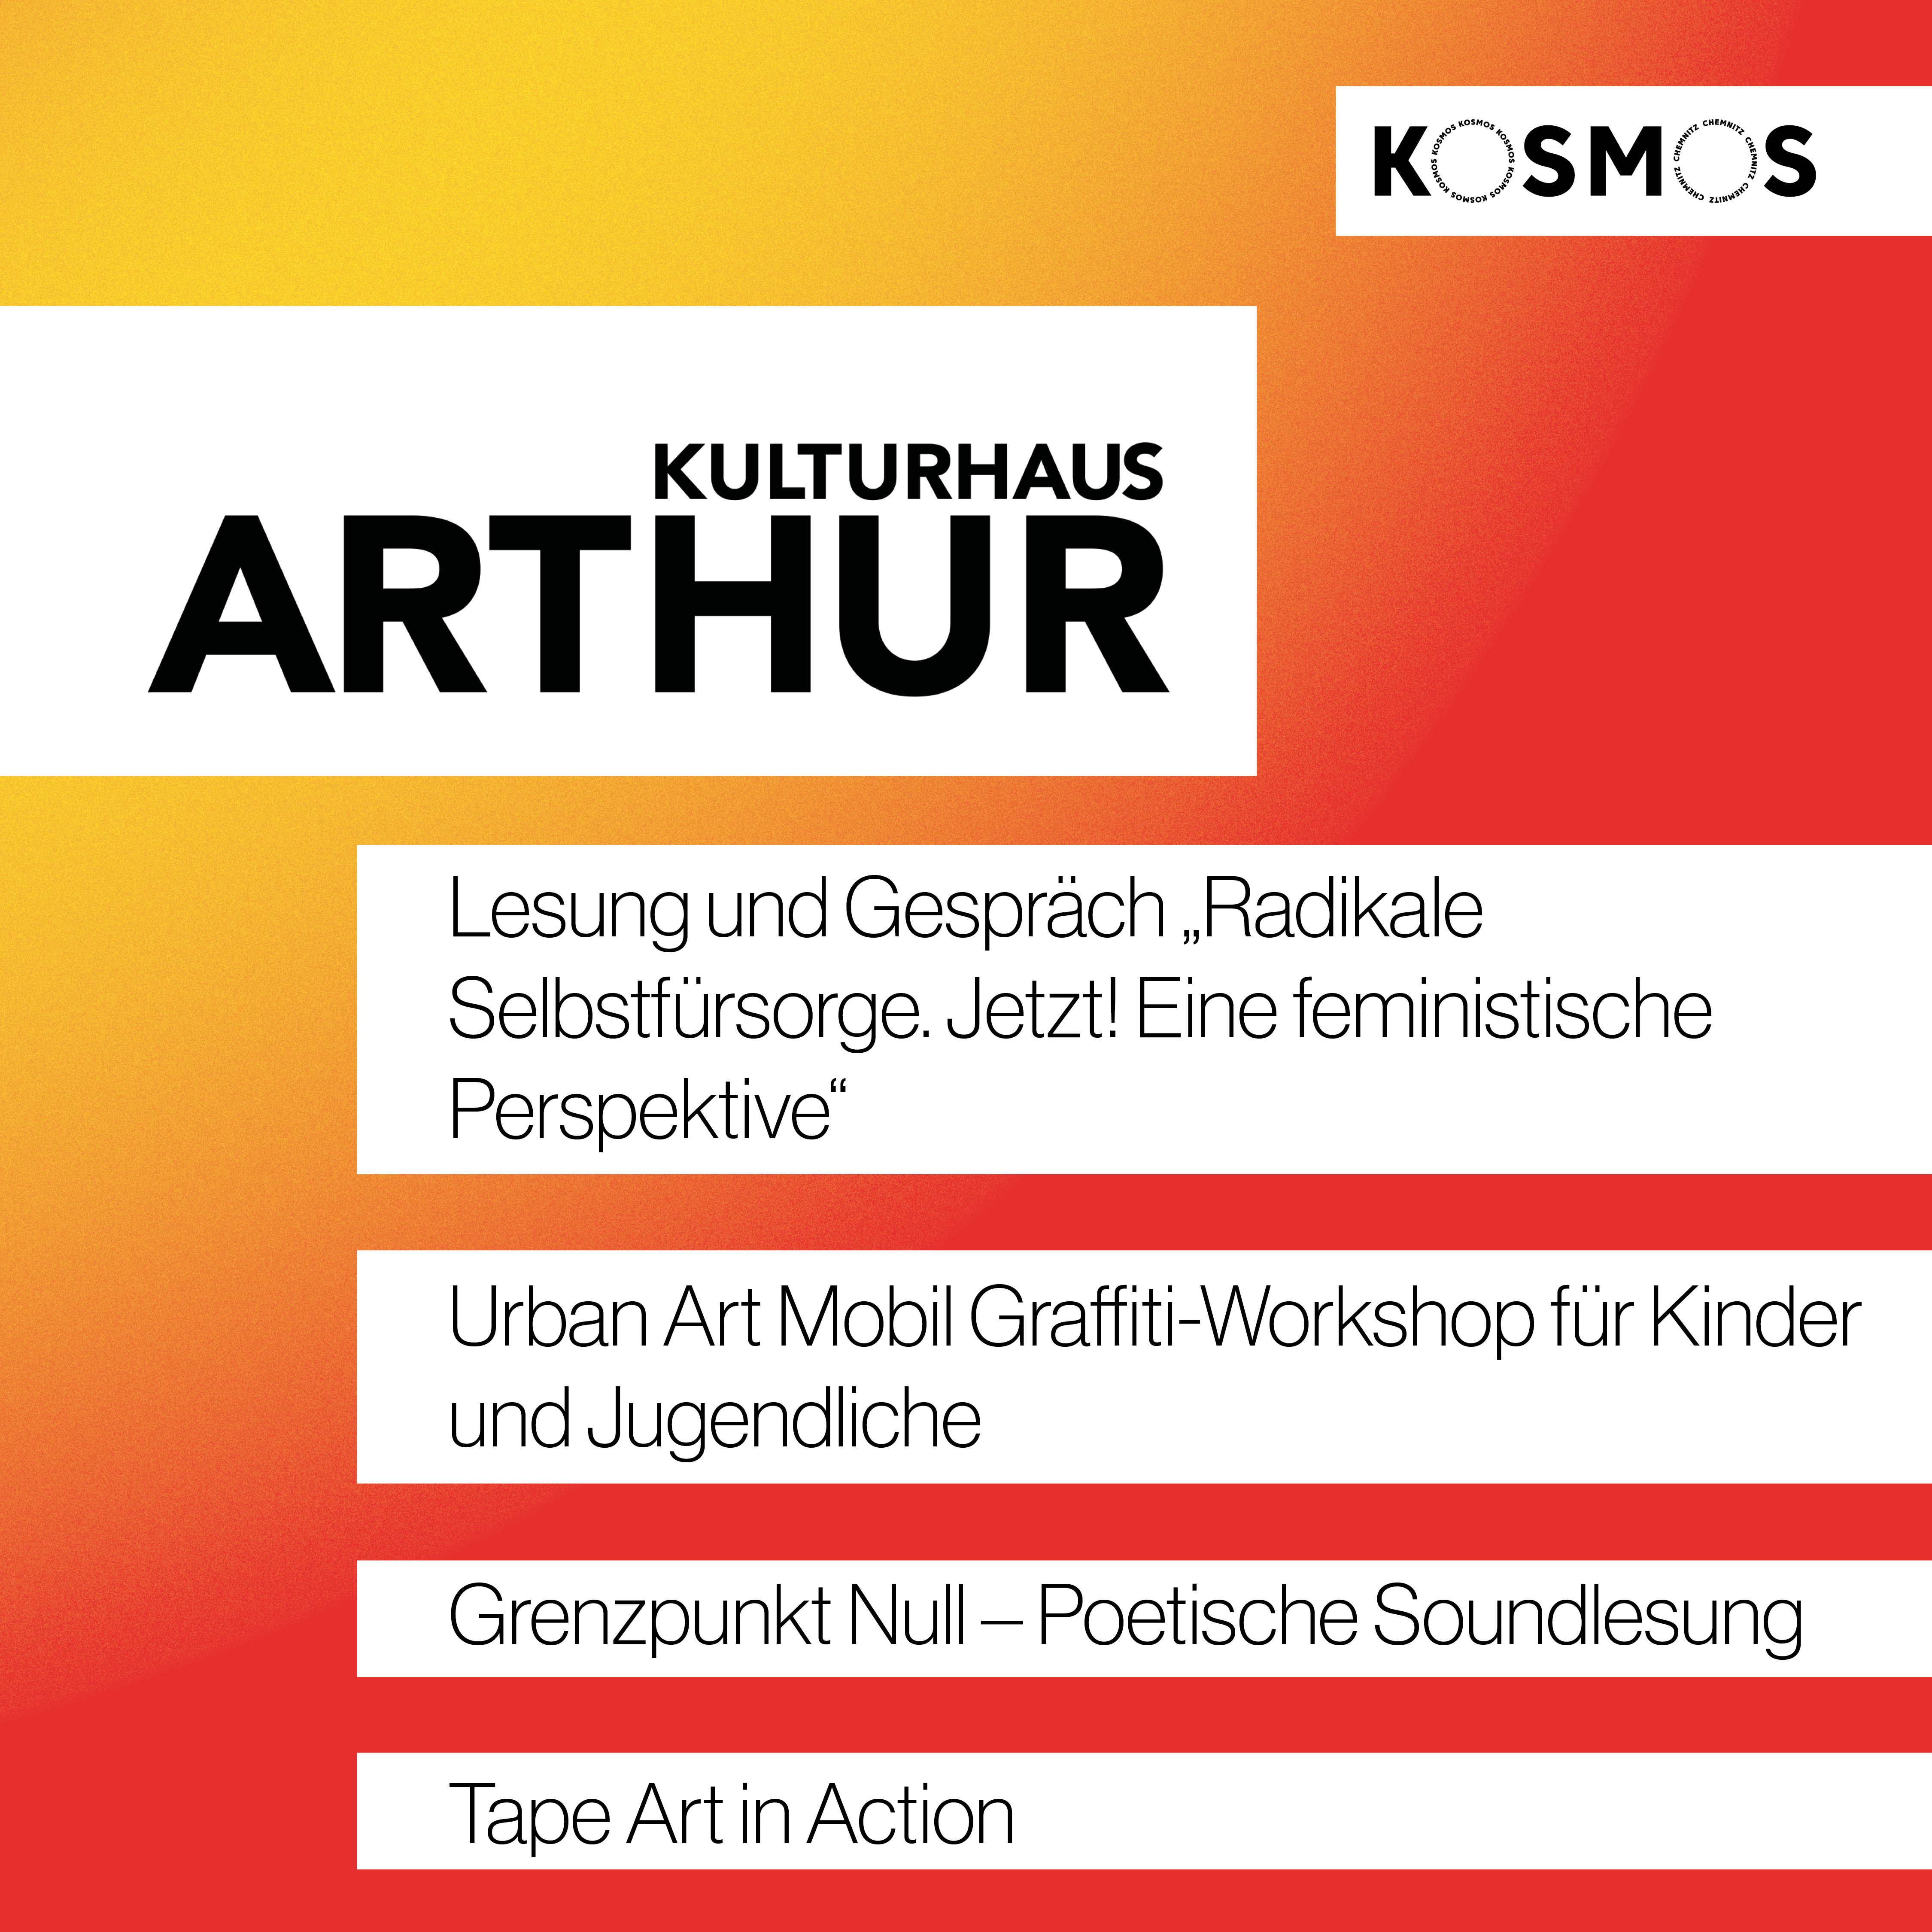 Das Kulturhaus Arthur auf dem KOSMOS Chemnitz  - 01